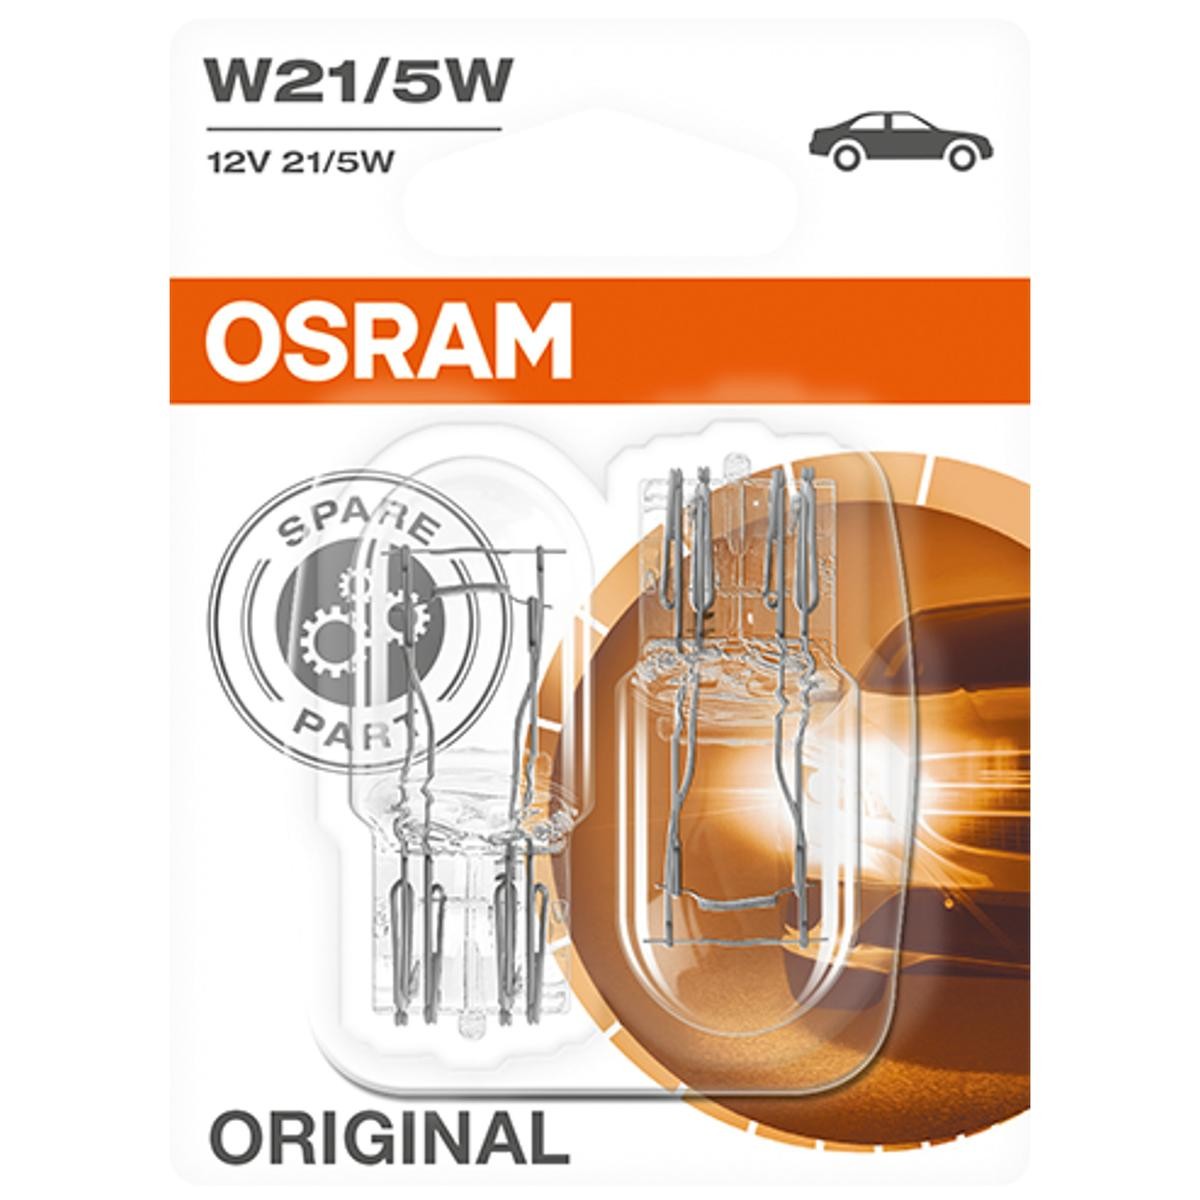 W21/5W OSRAM 7515-02B originali MAZDA 5 2010 Lampadina indicatore direzione